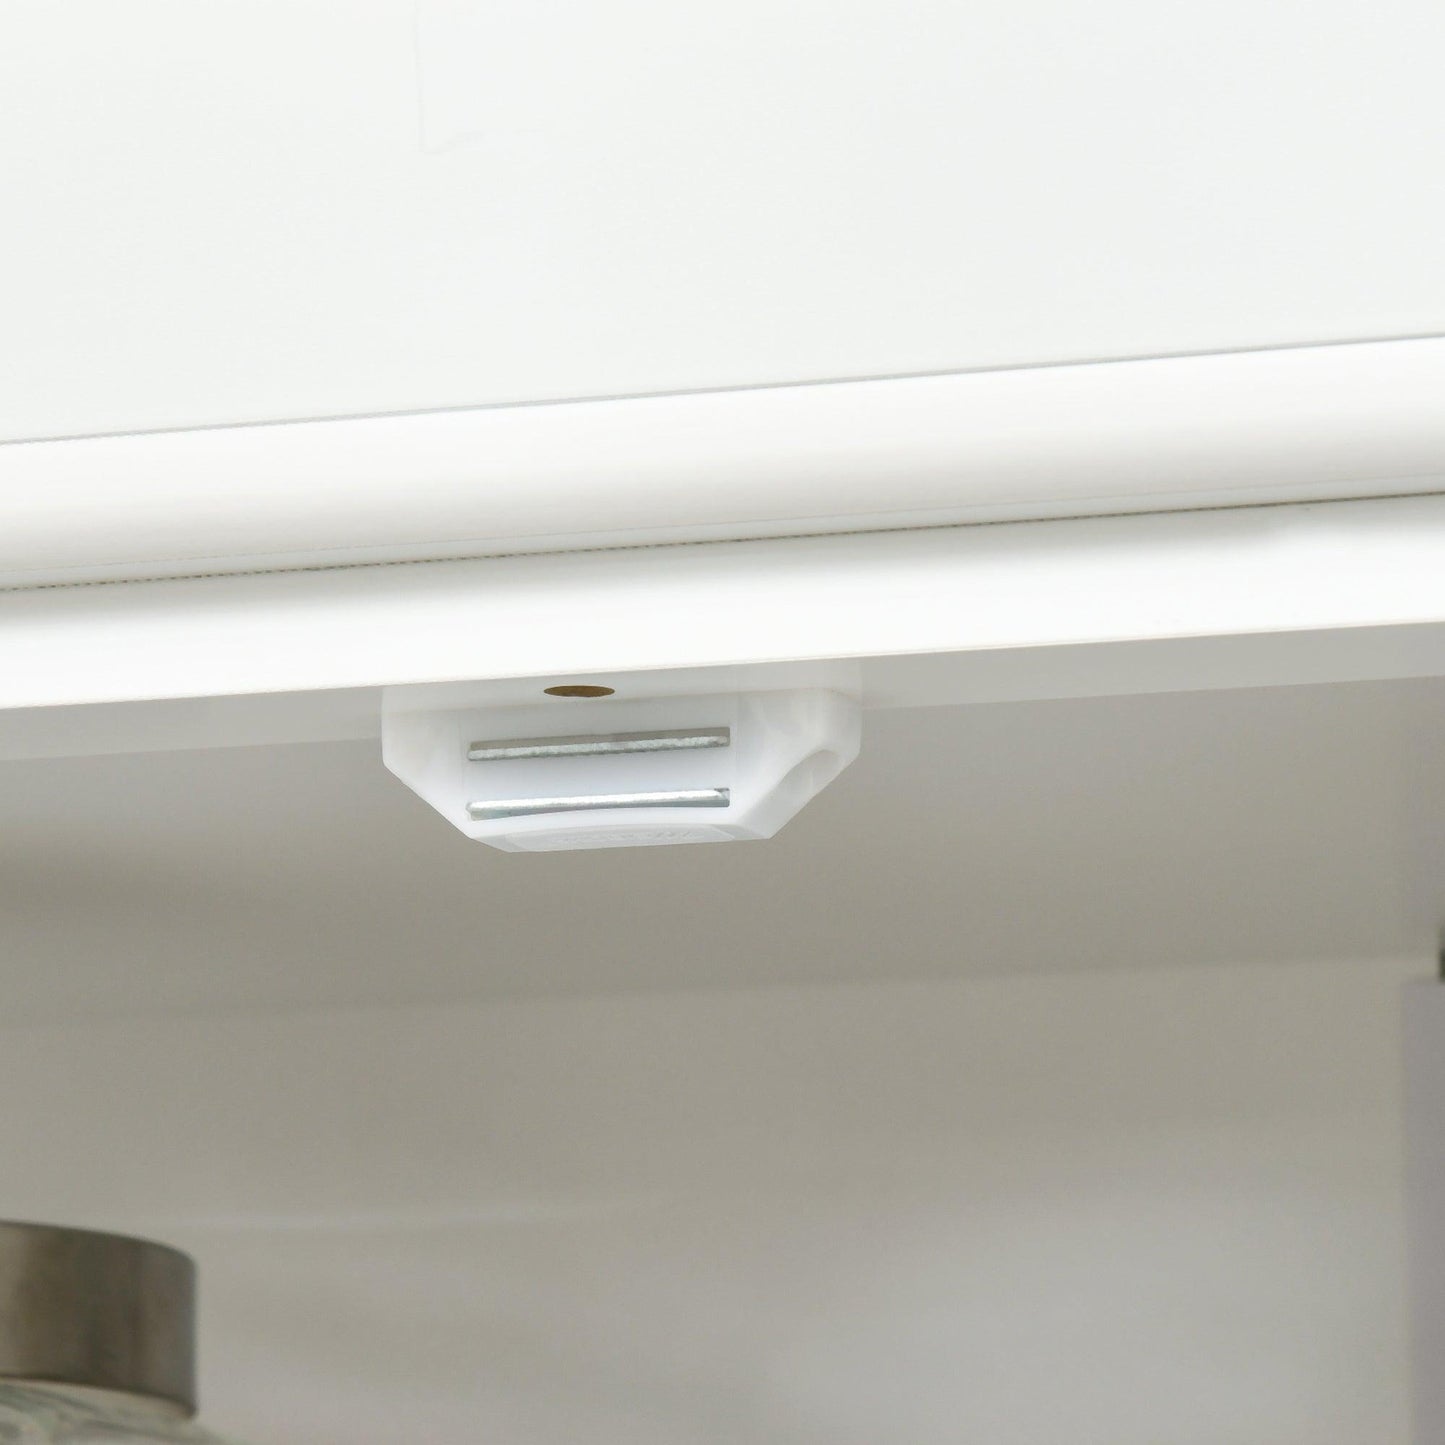 HOMCOM White Kitchen Cabinet with Adjustable Shelves - ALL4U RETAILER LTD